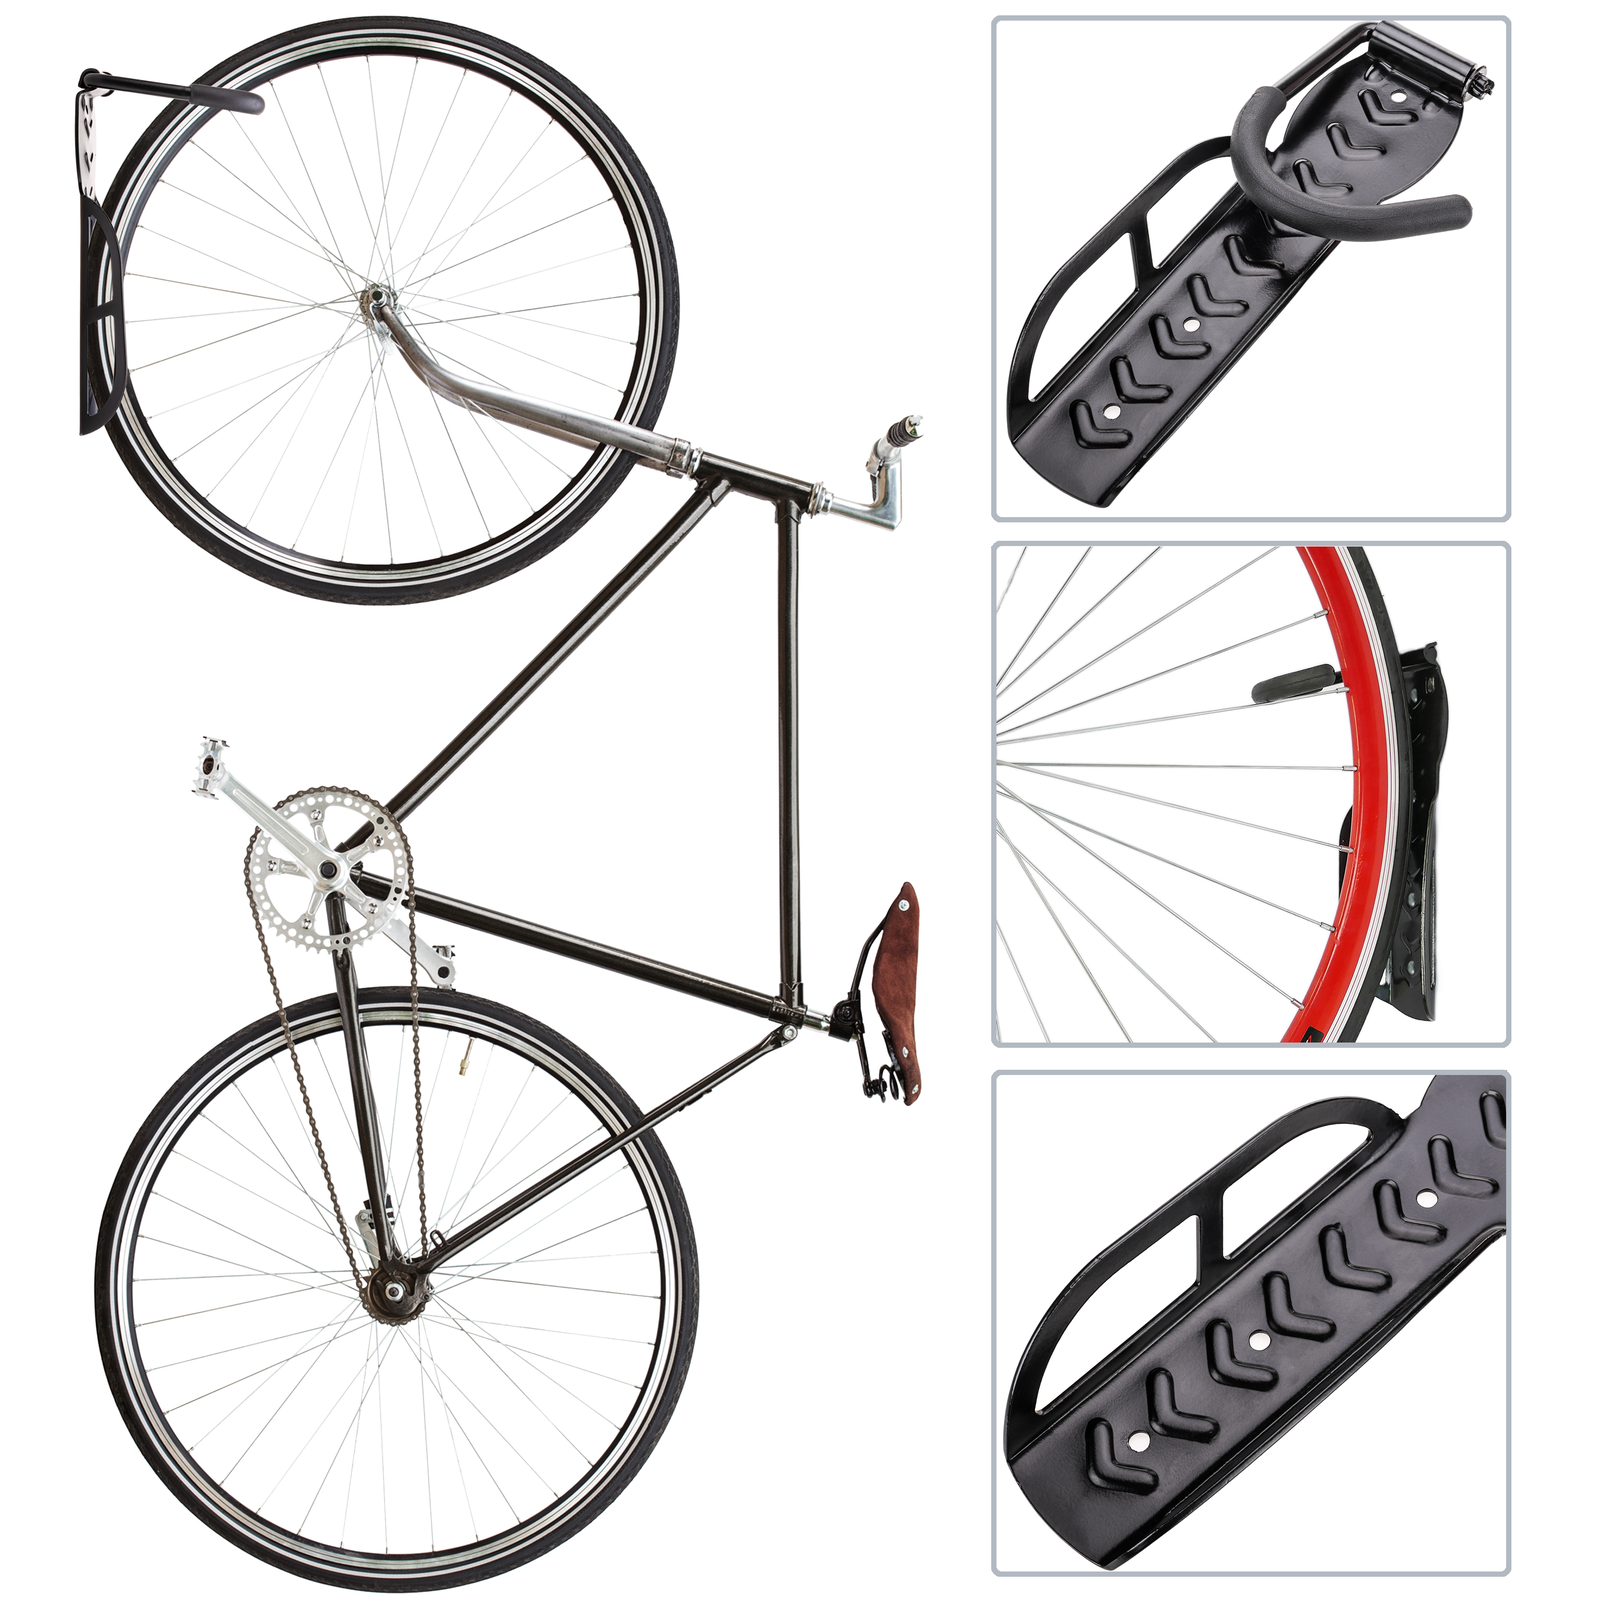 Pata de cabra para bicicleta Caballete ajustable de 28-33 cm - Cablematic